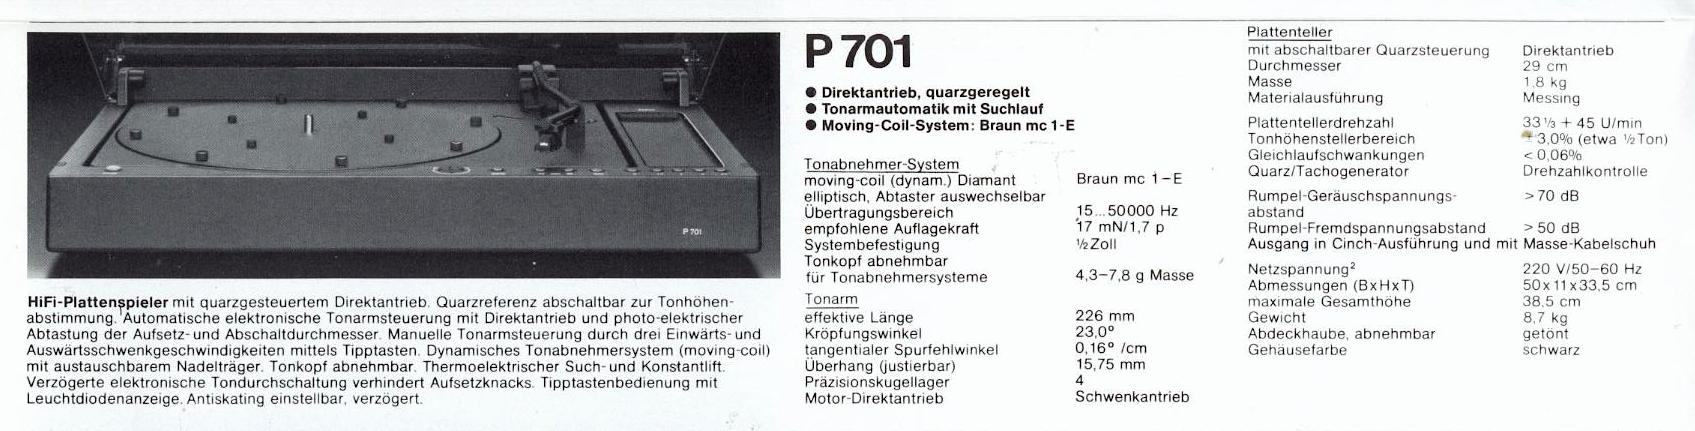 Braun P 701-Prospekt-1.jpg